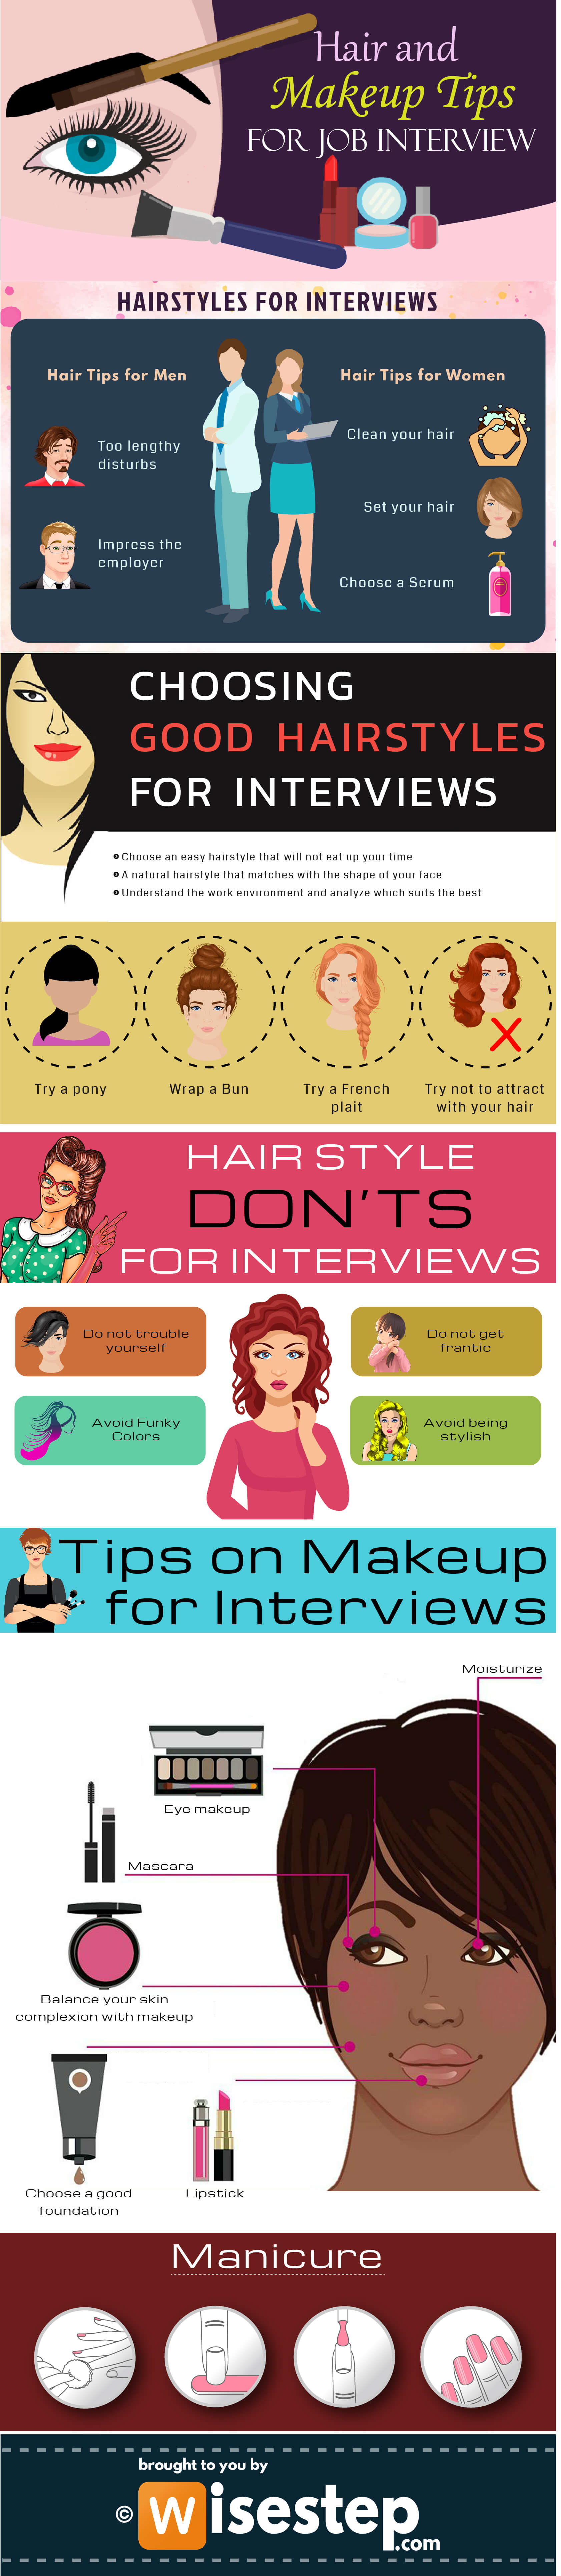 Hair and makeup tips